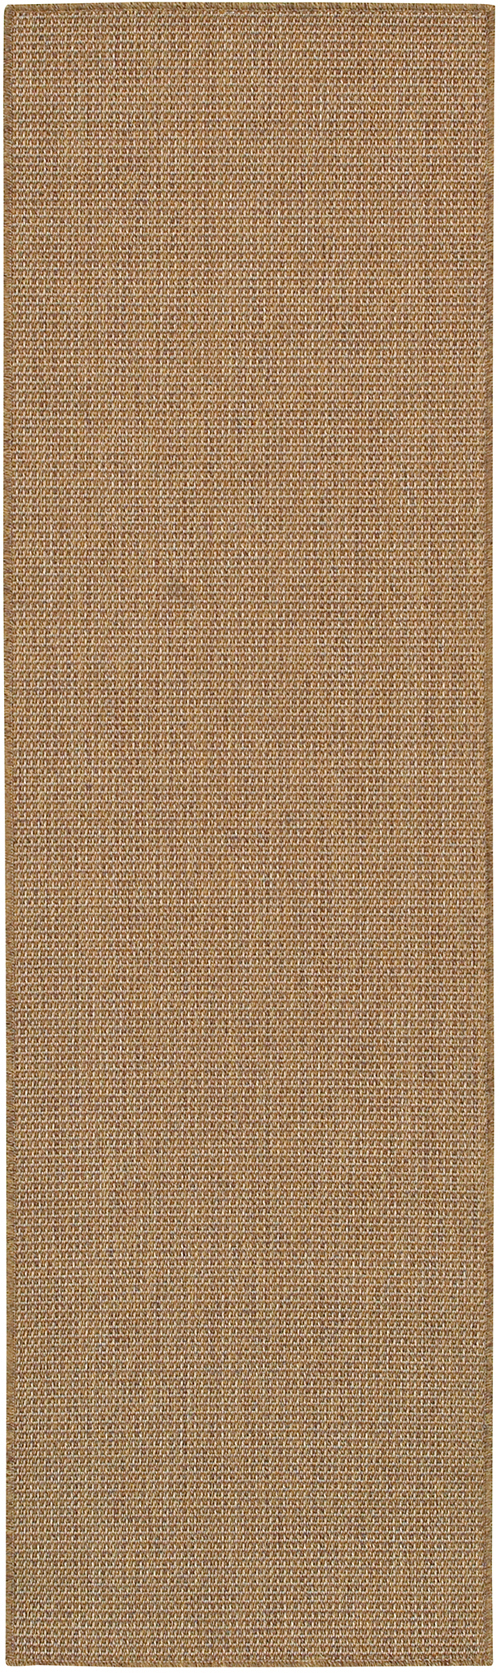 oriental weavers karavia 2067x sand